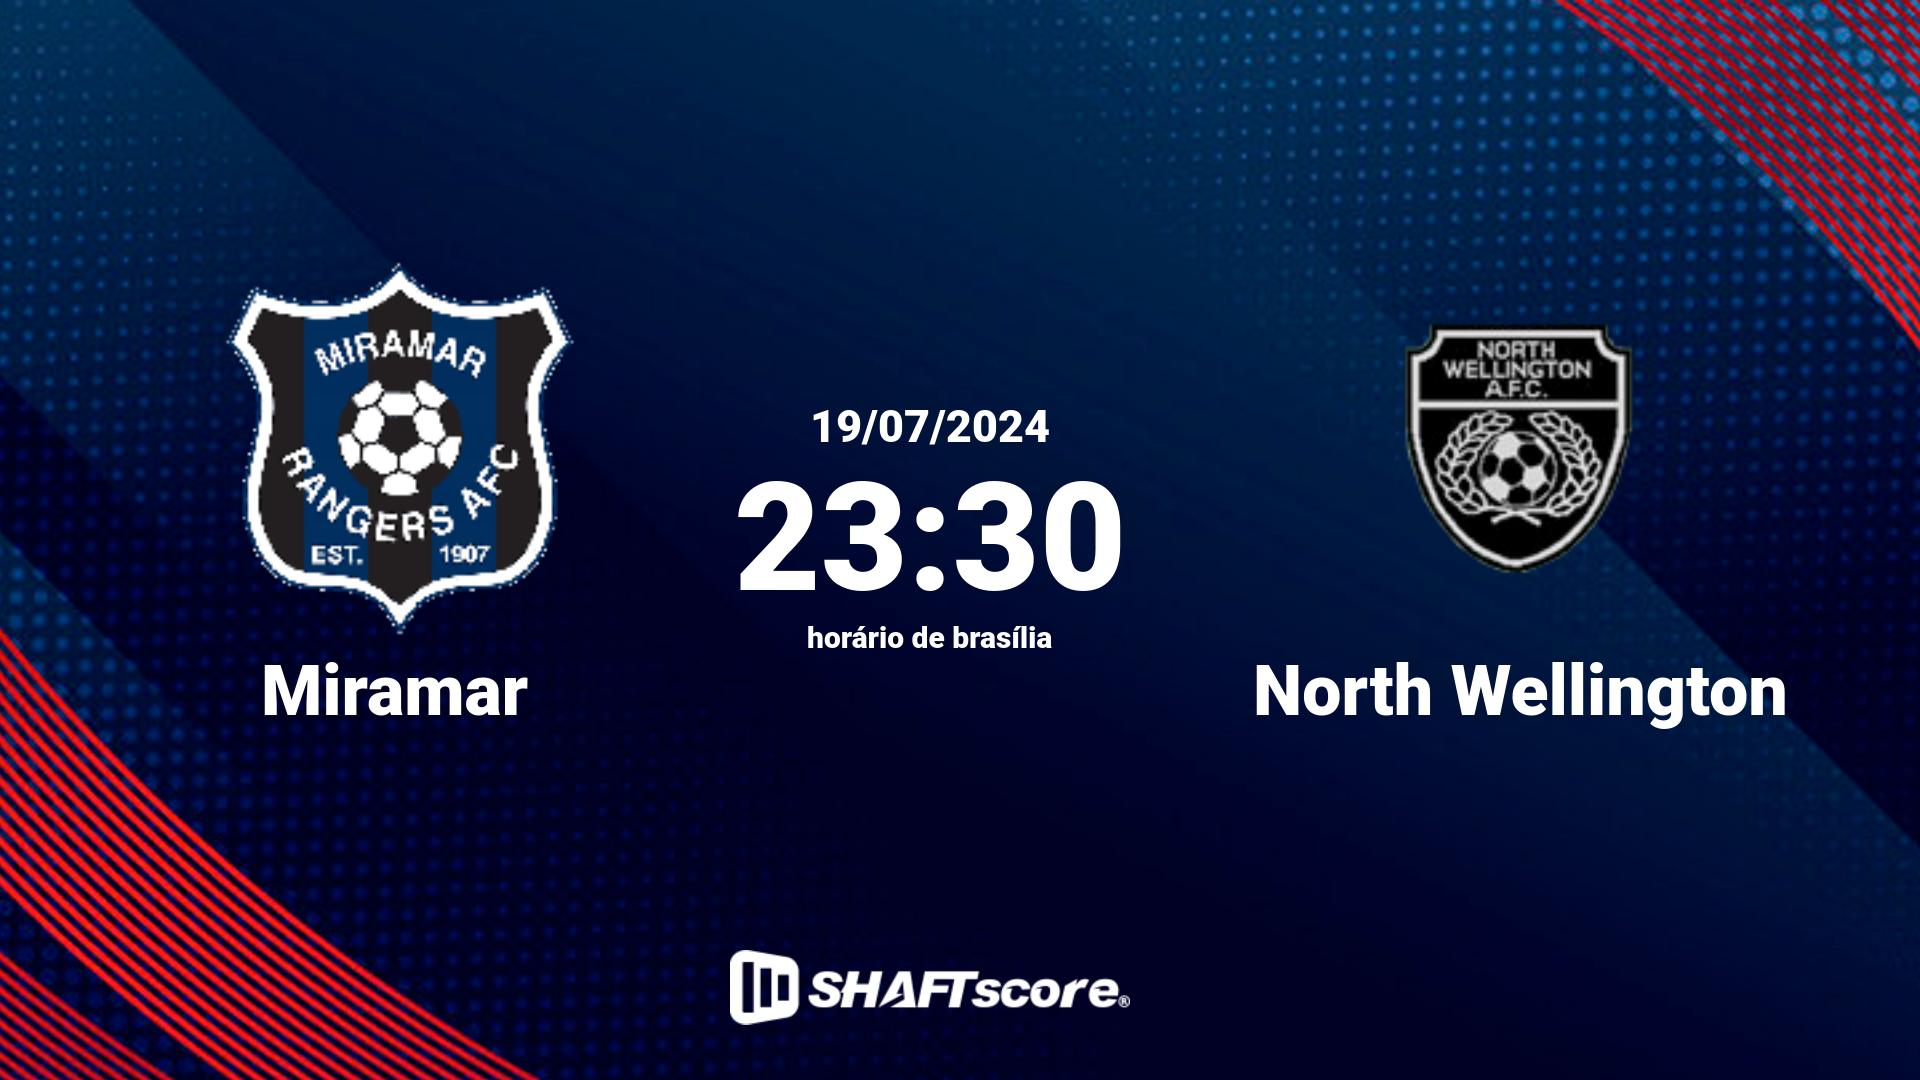 Estatísticas do jogo Miramar vs North Wellington 19.07 23:30